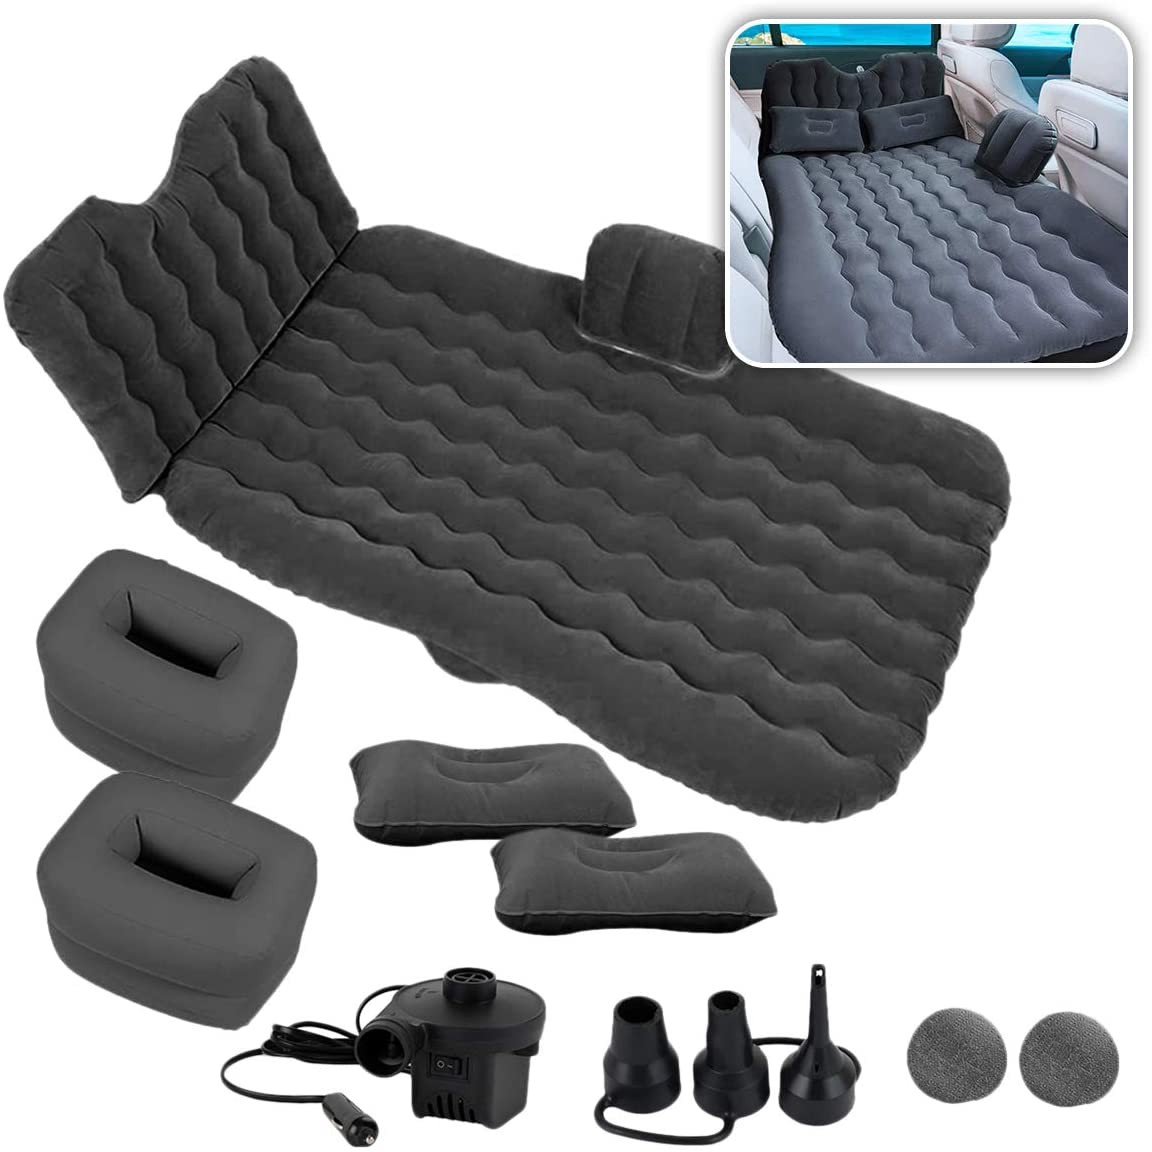 Pump 2 Pillows Inflatable Travel Camping Car Seat Sleep Rest Mattress Air Bed 